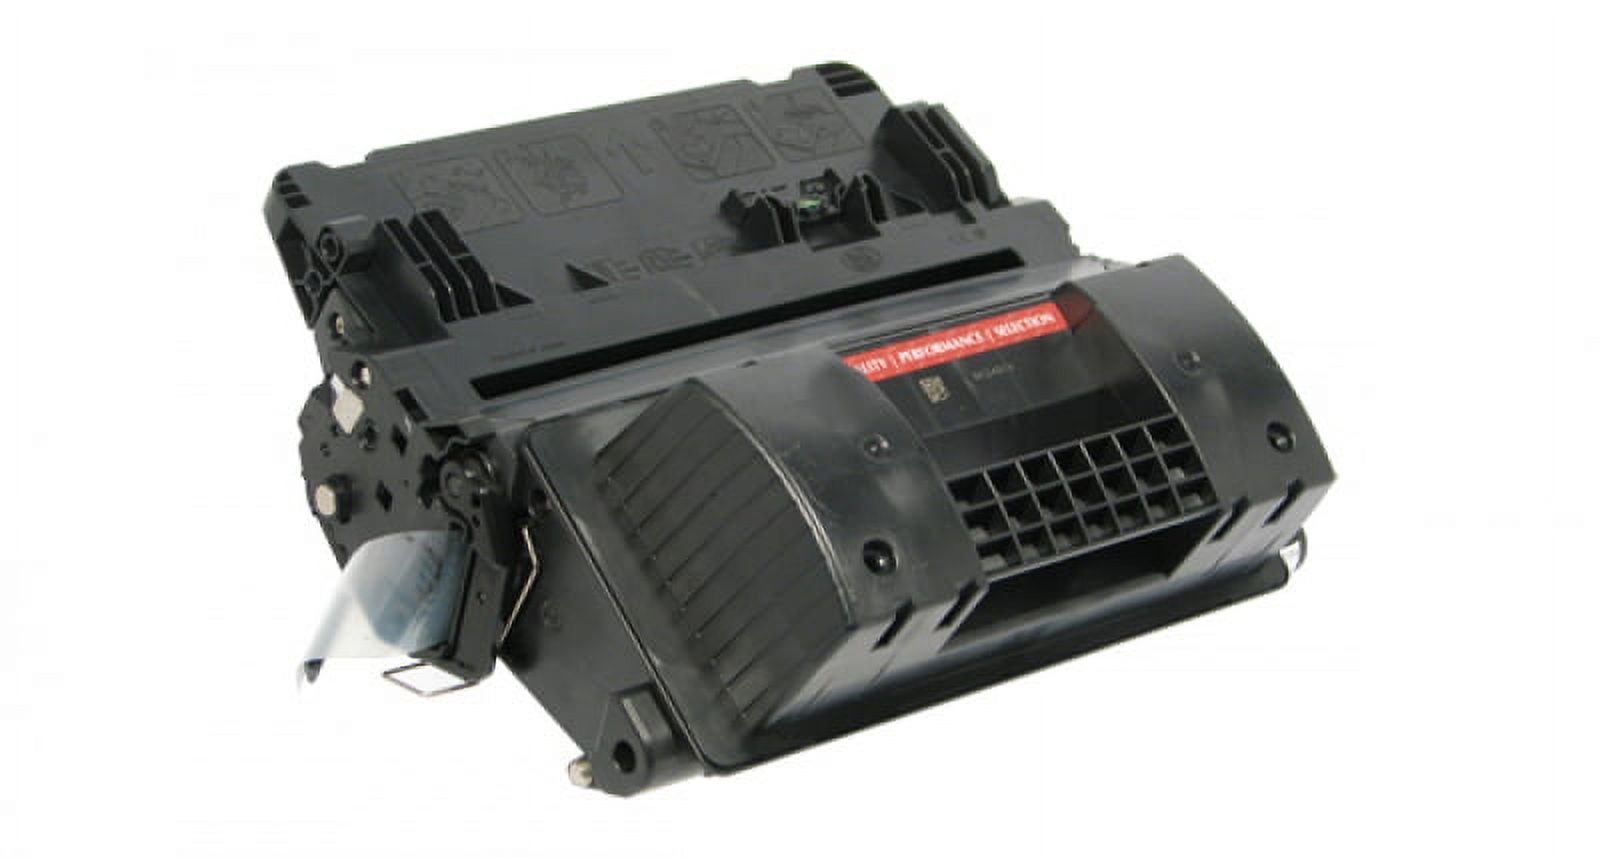 West Point MICR Toner Cartridge - Alternative for HP, Troy 02-81301-001, 64A, 64X, CC364A, CC364X, CC364X(M), 02-81300-001, 2-81300-001, 2-81301-001 - Black - Laser - High Yield - 24000 - image 2 of 2